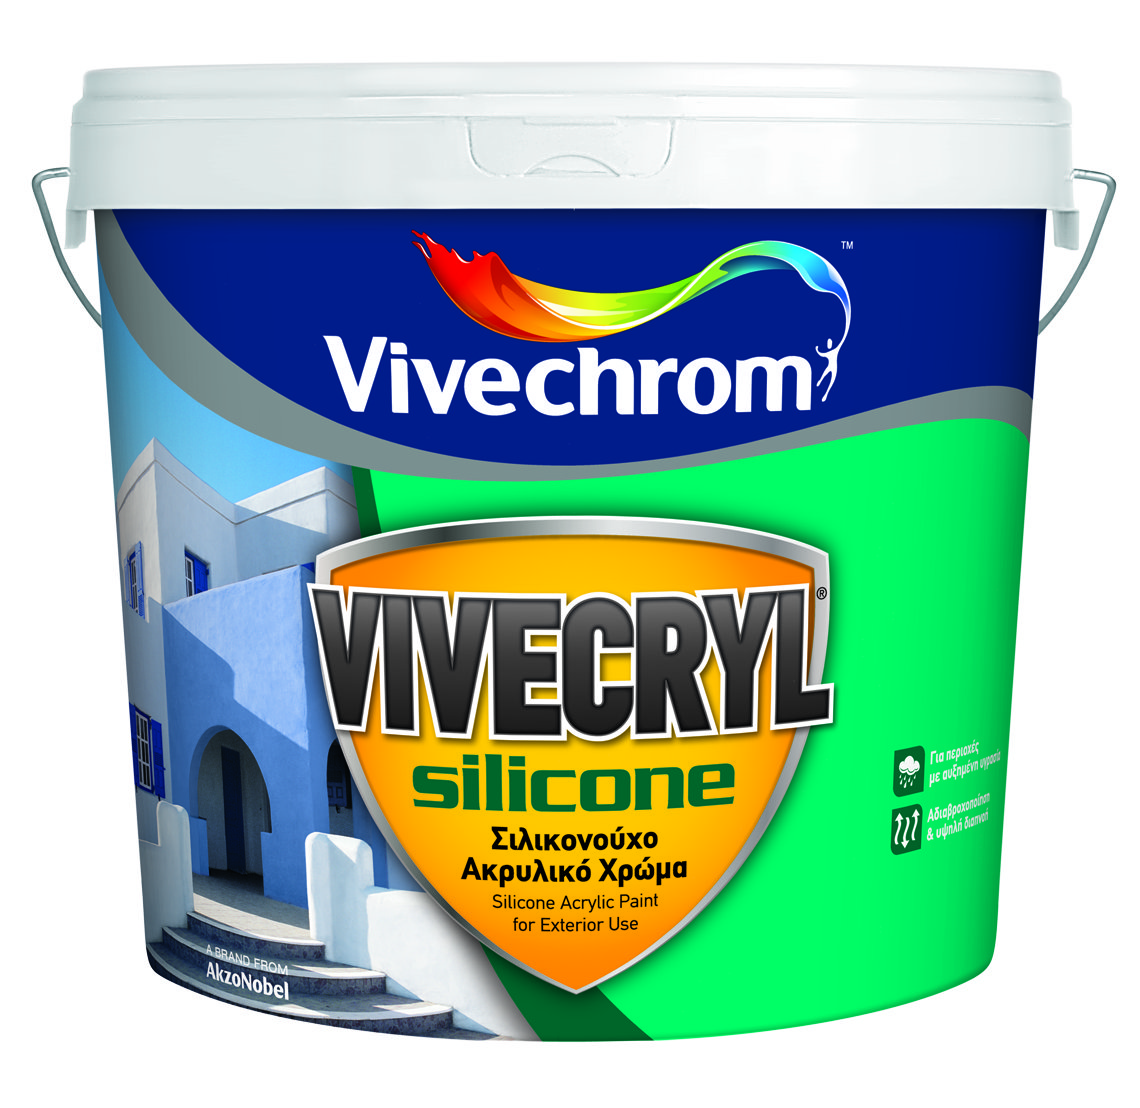 Vivechrom Vivecryl Silicone Matt Finish Mixing Base D 3L